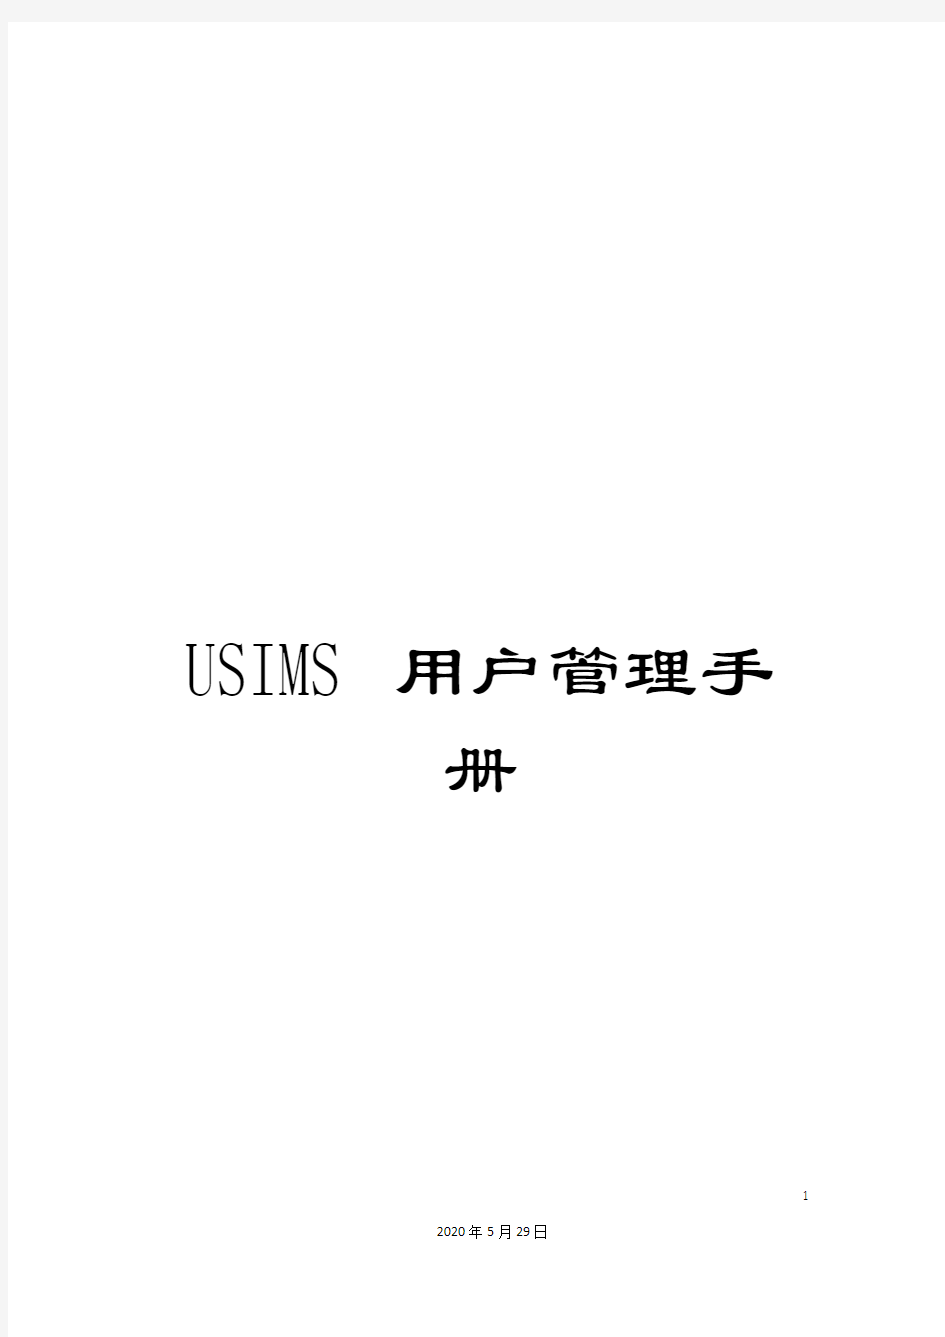 USIMS用户管理手册